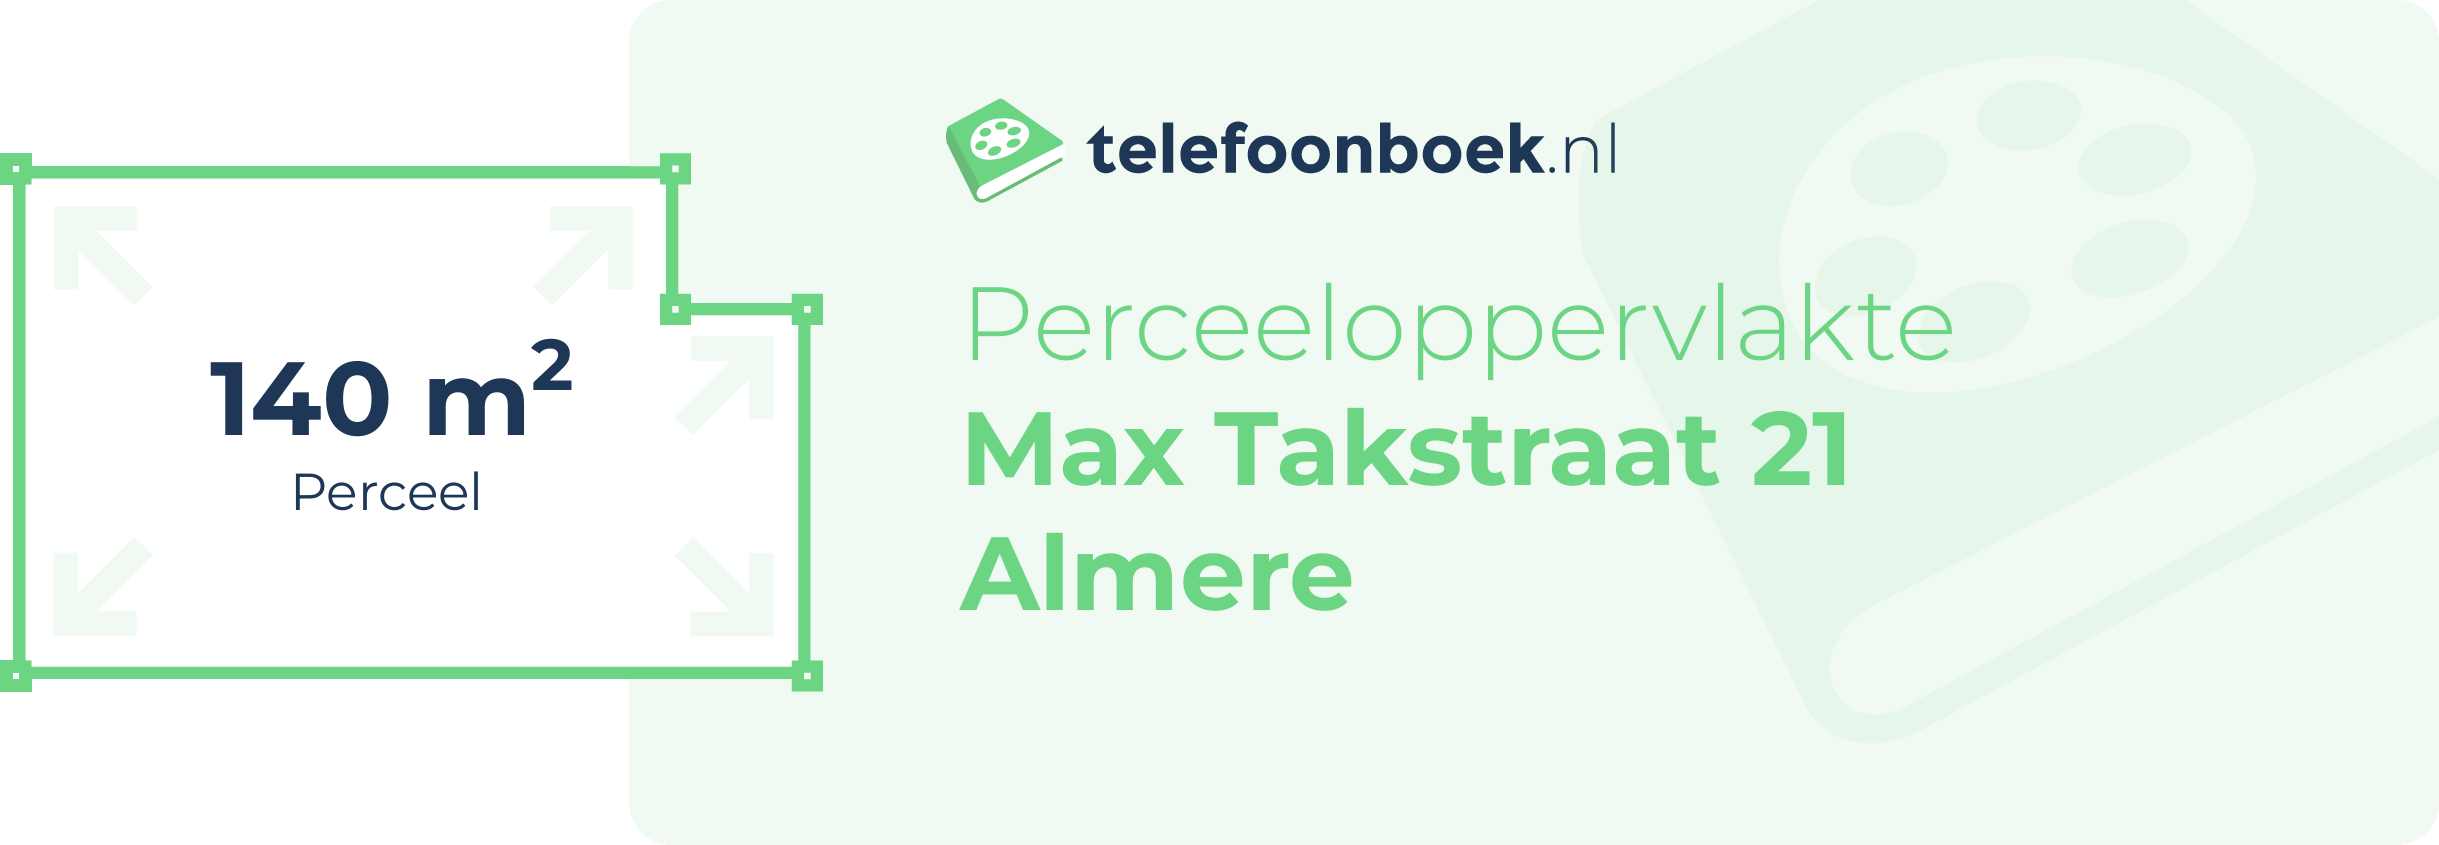 Perceeloppervlakte Max Takstraat 21 Almere